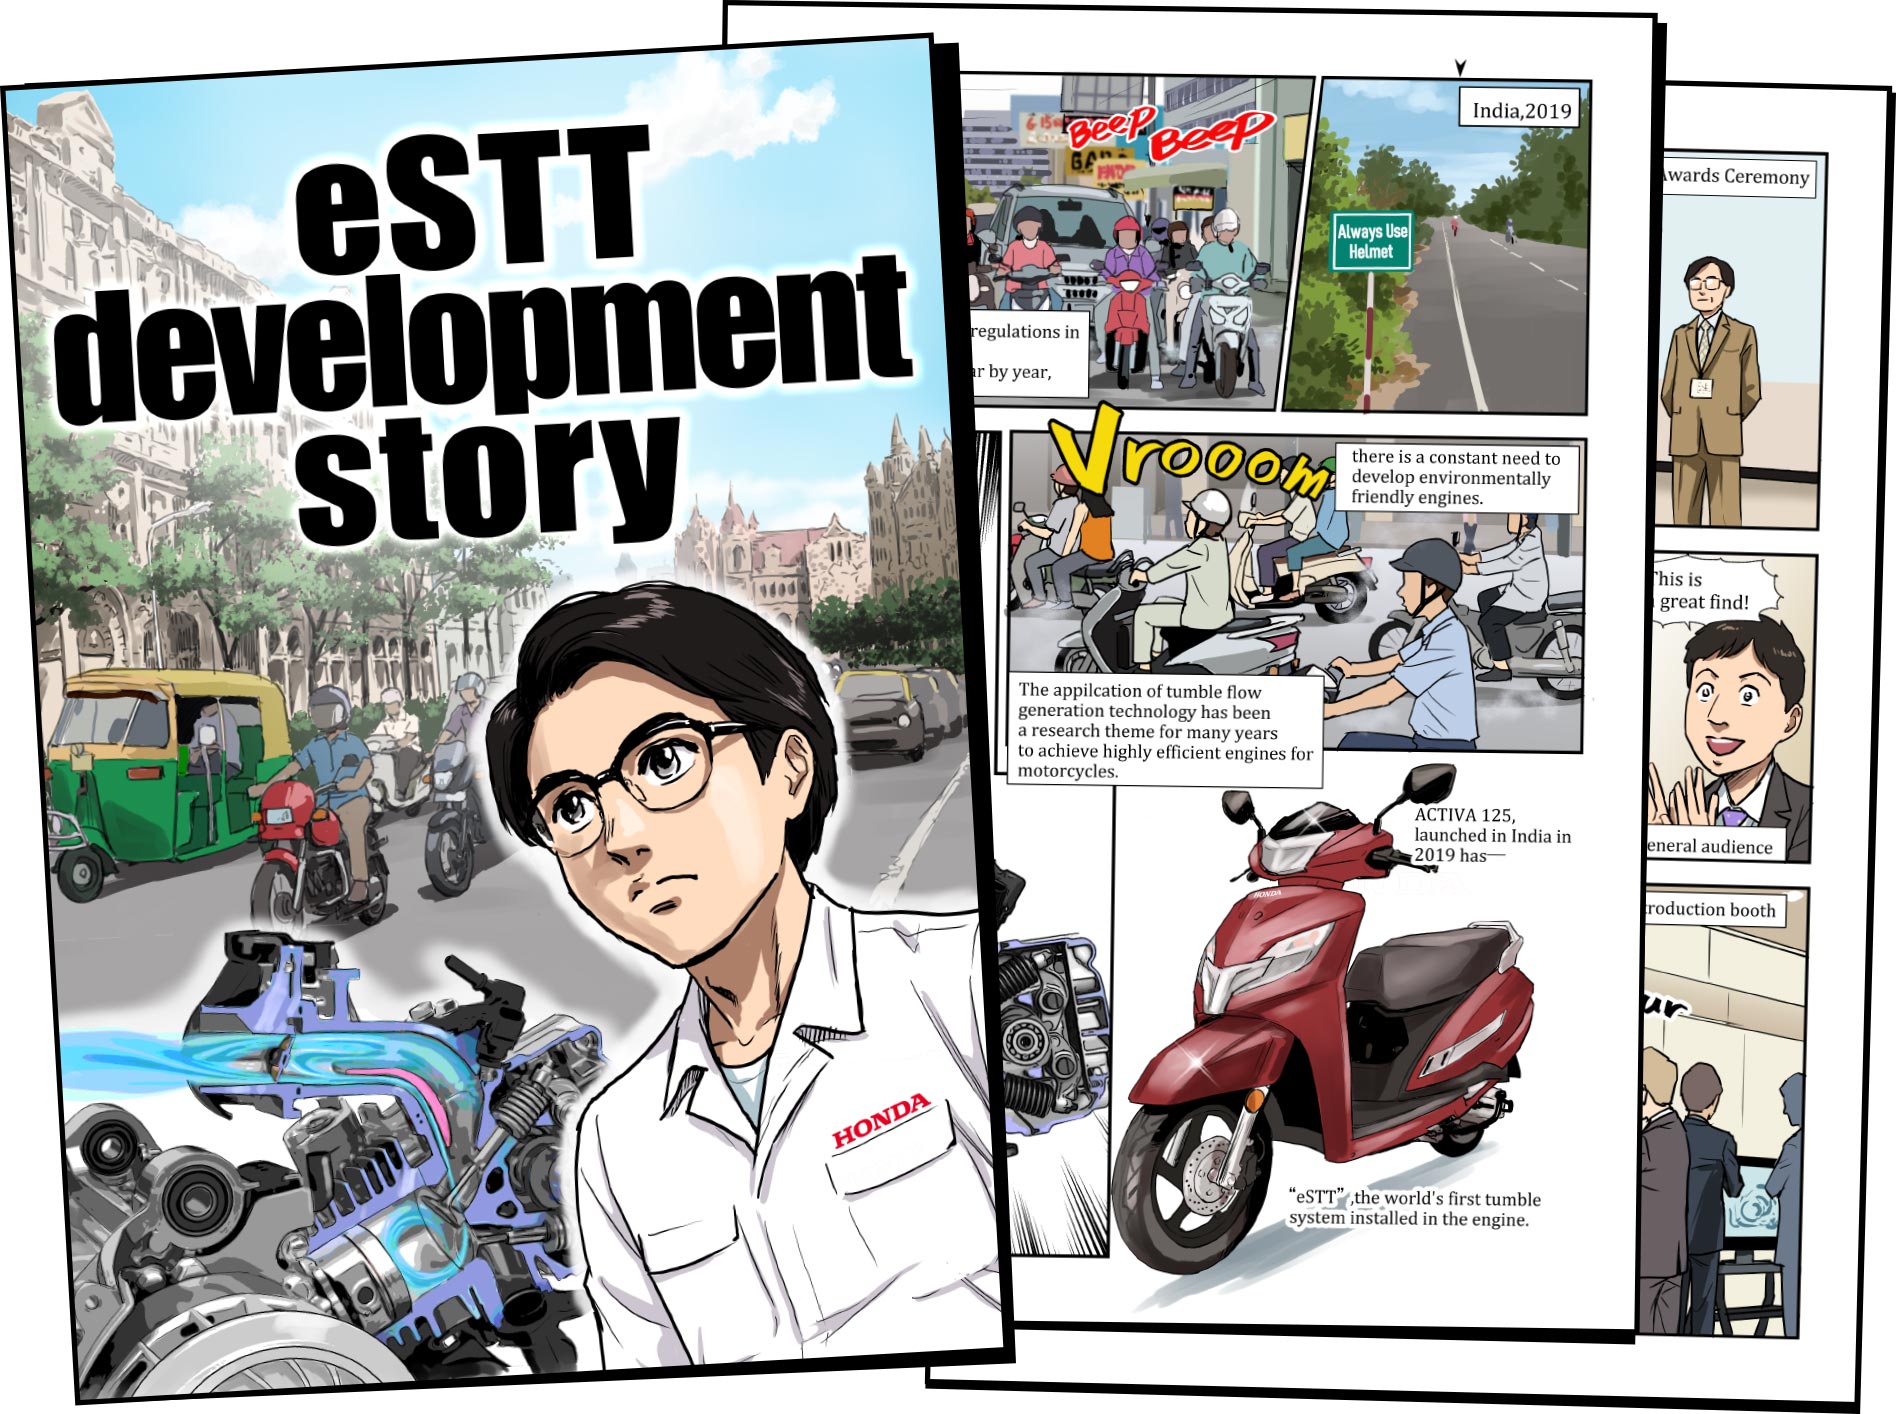 eSTT Development Story